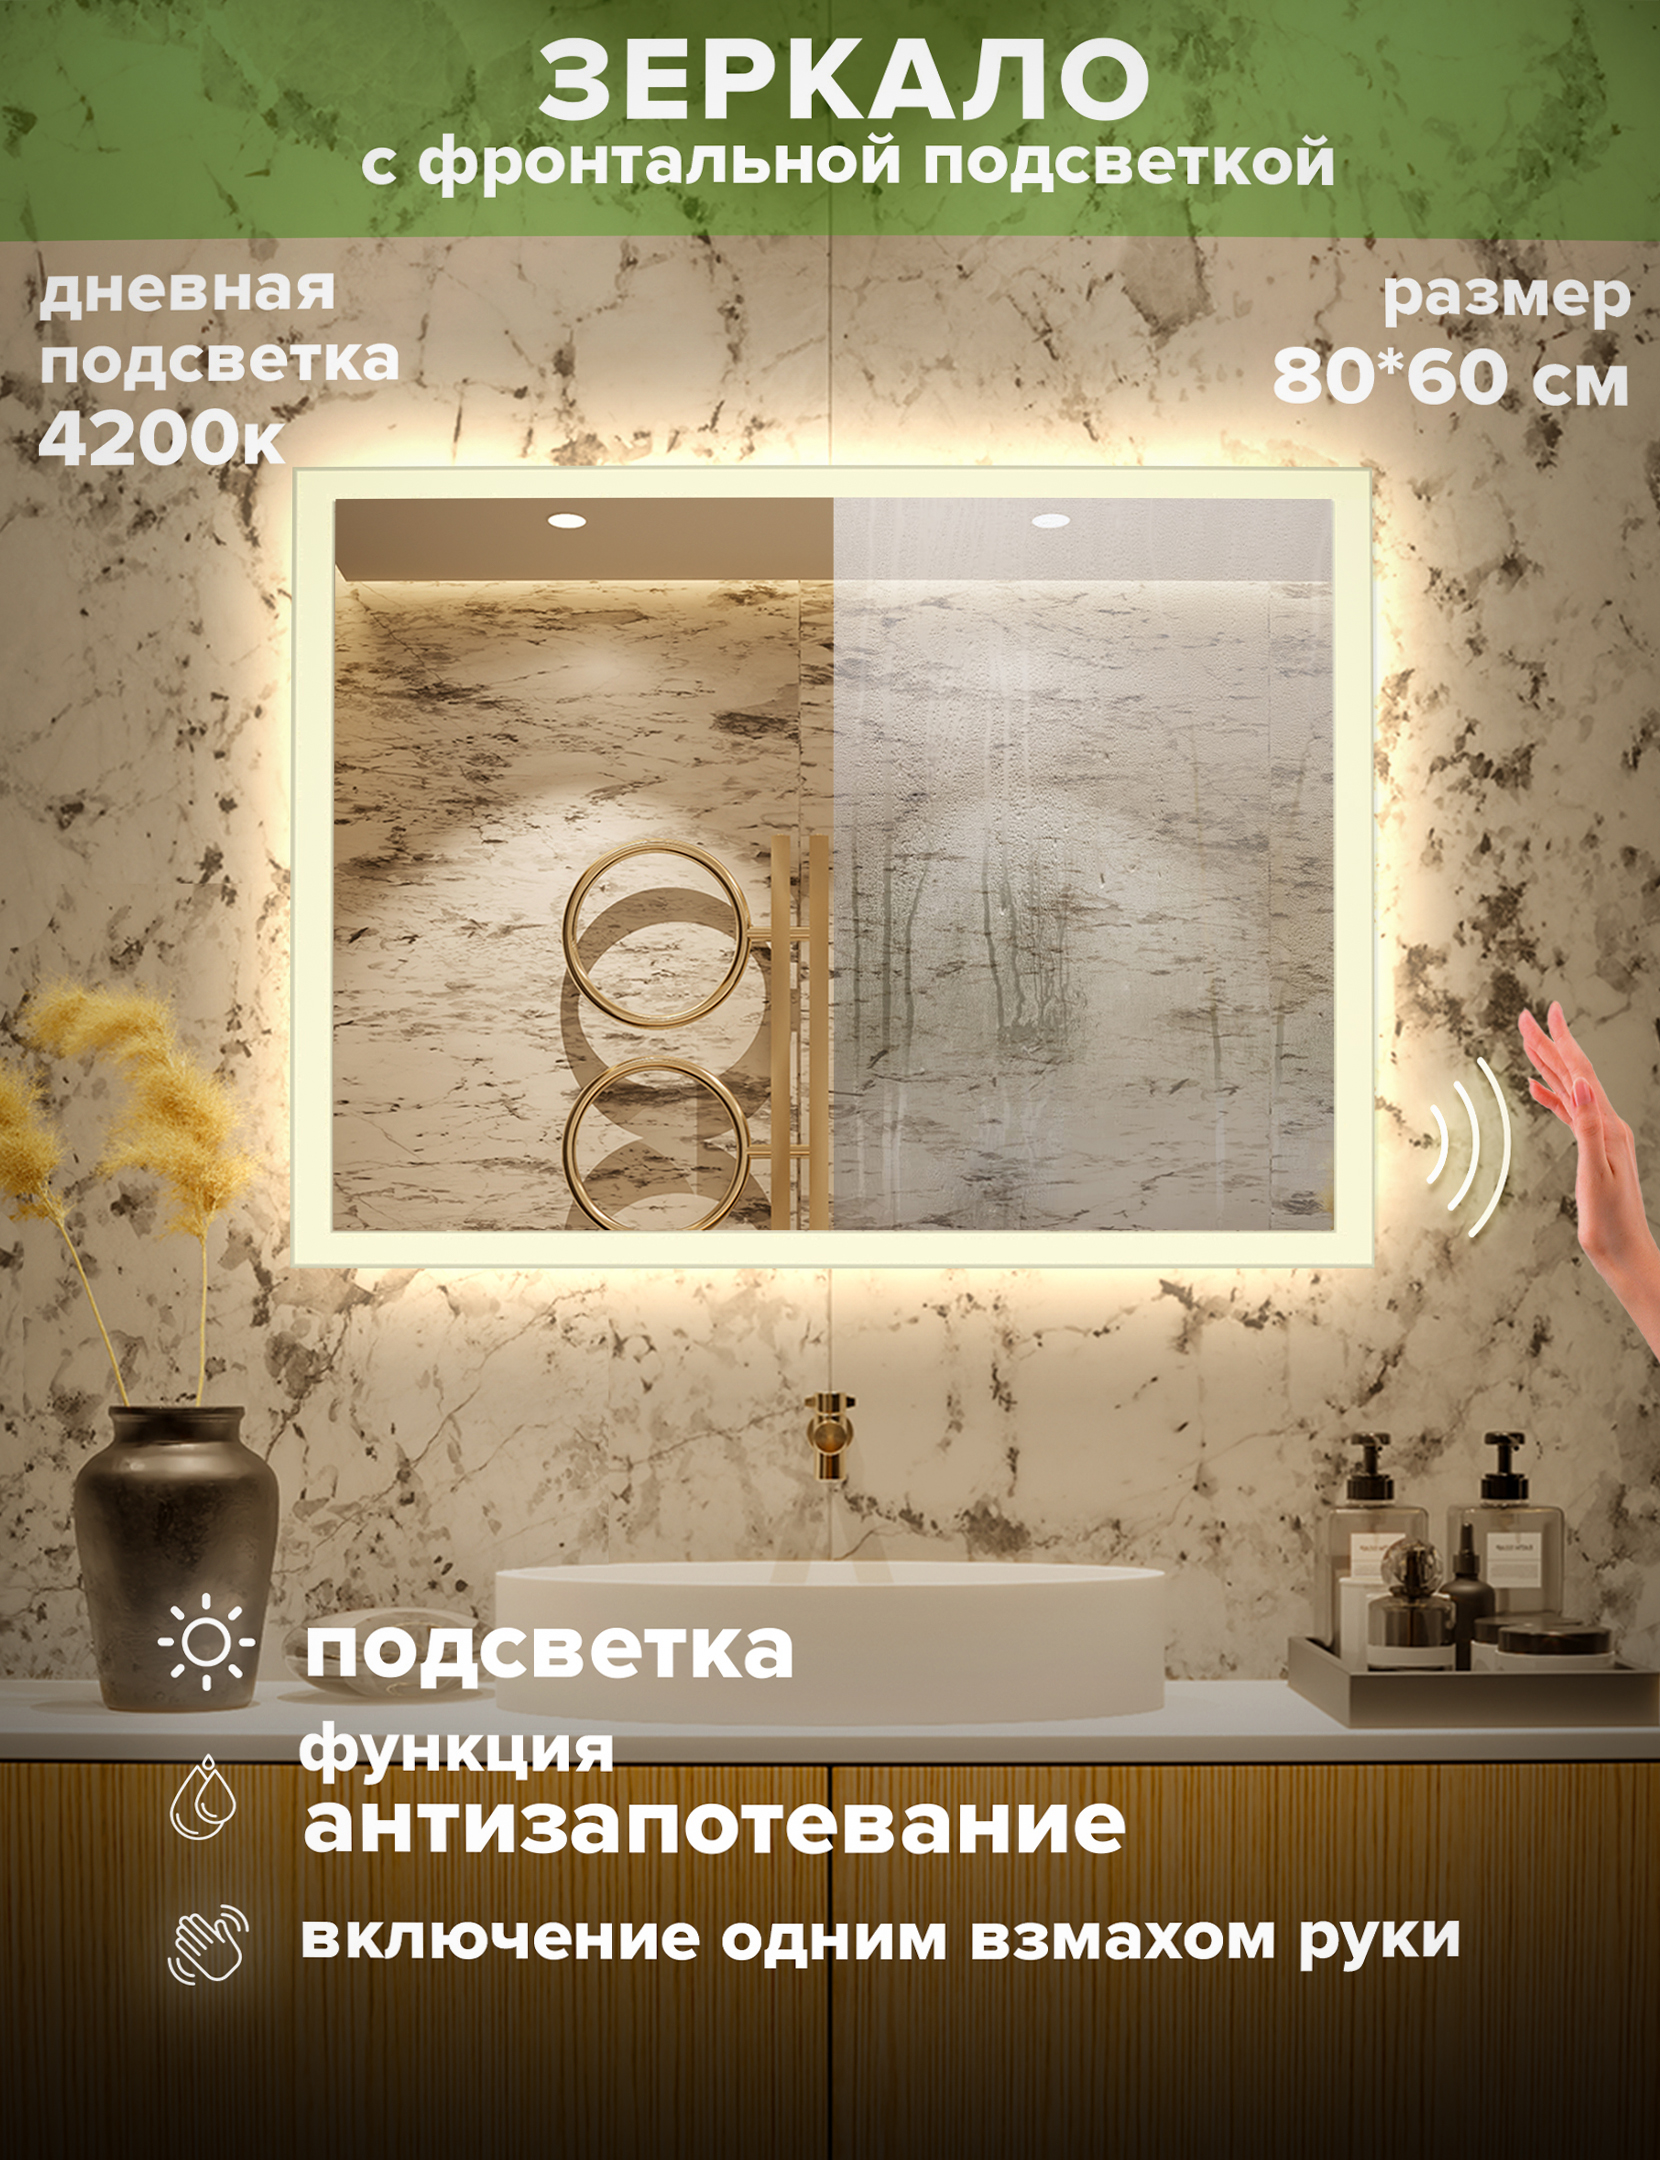 Зеркало для ванной Alfa Mirrors, дневная подсветка 4200К, прямоуг. 80*60см, MNiko-86Avzd